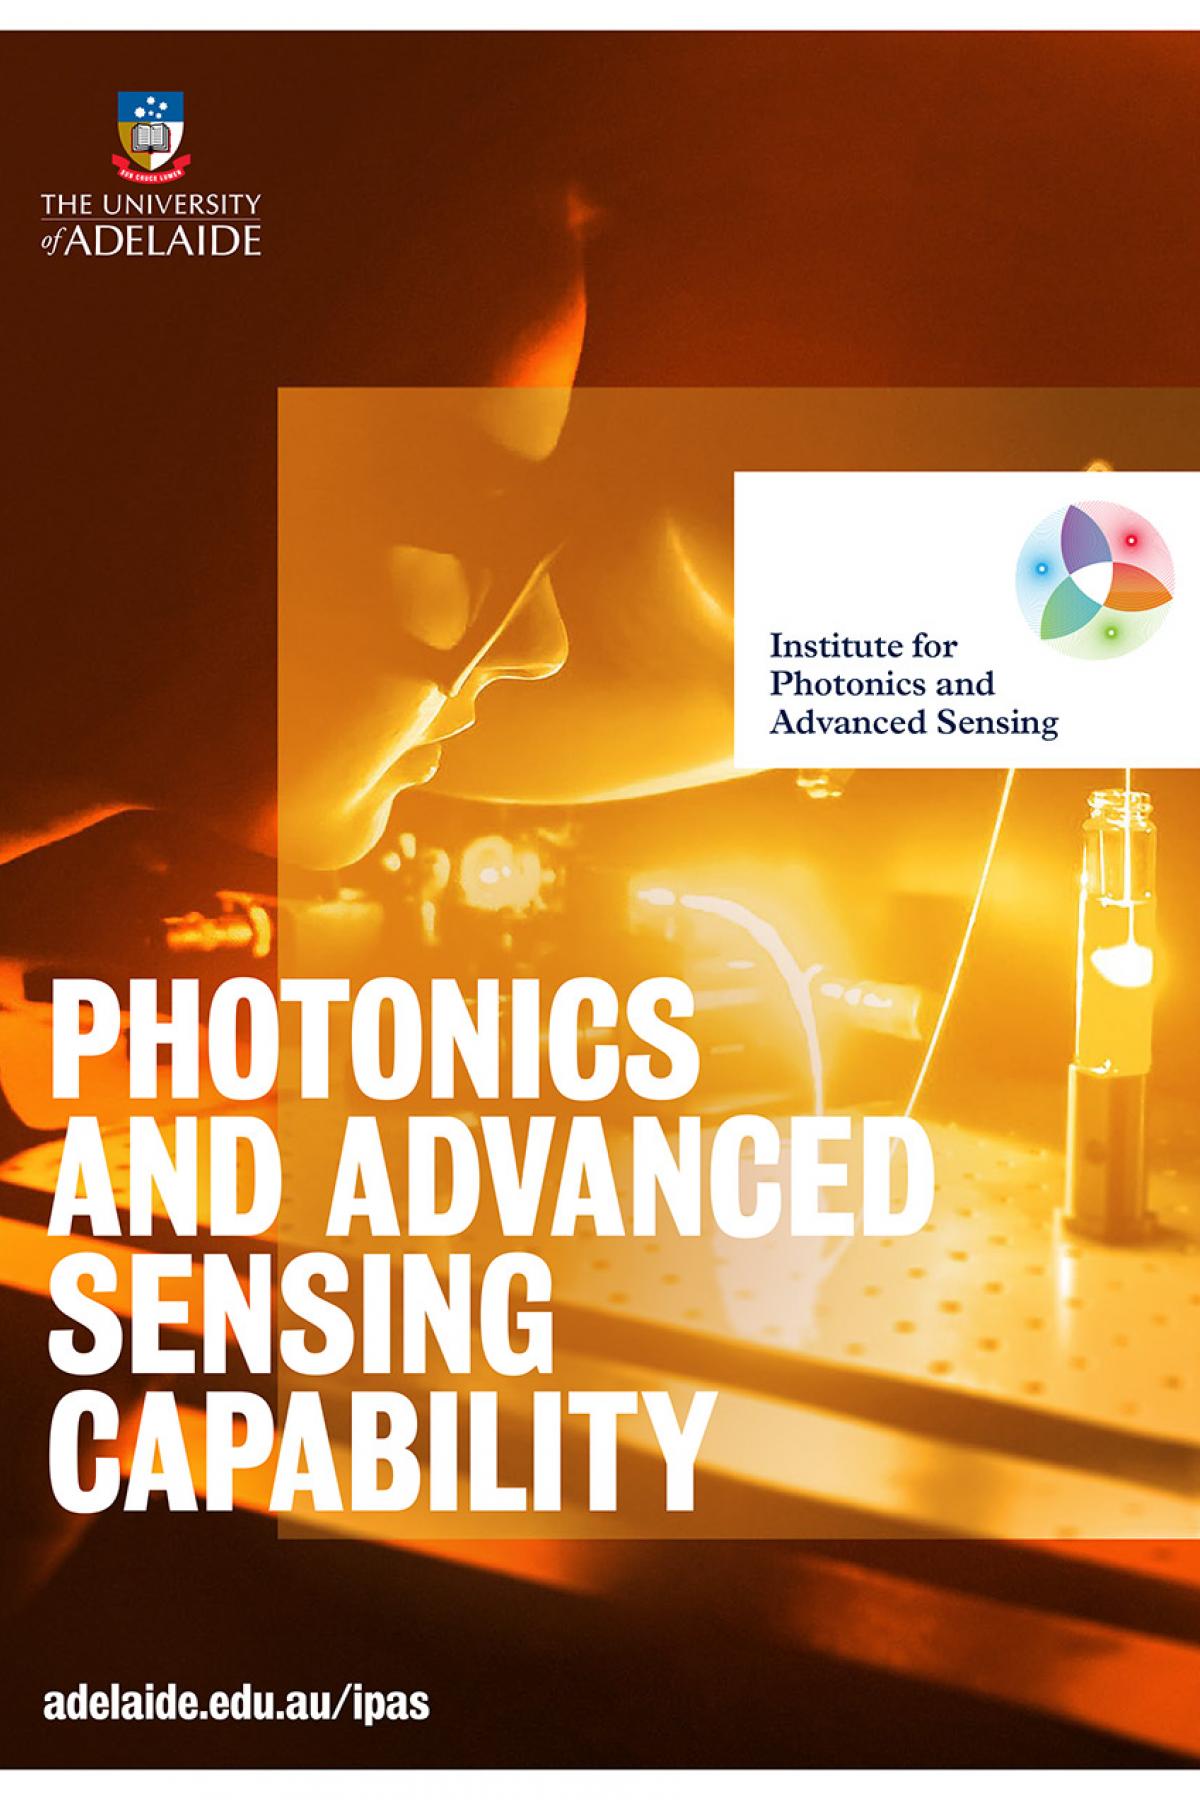 Photonics and advanced sensing capability